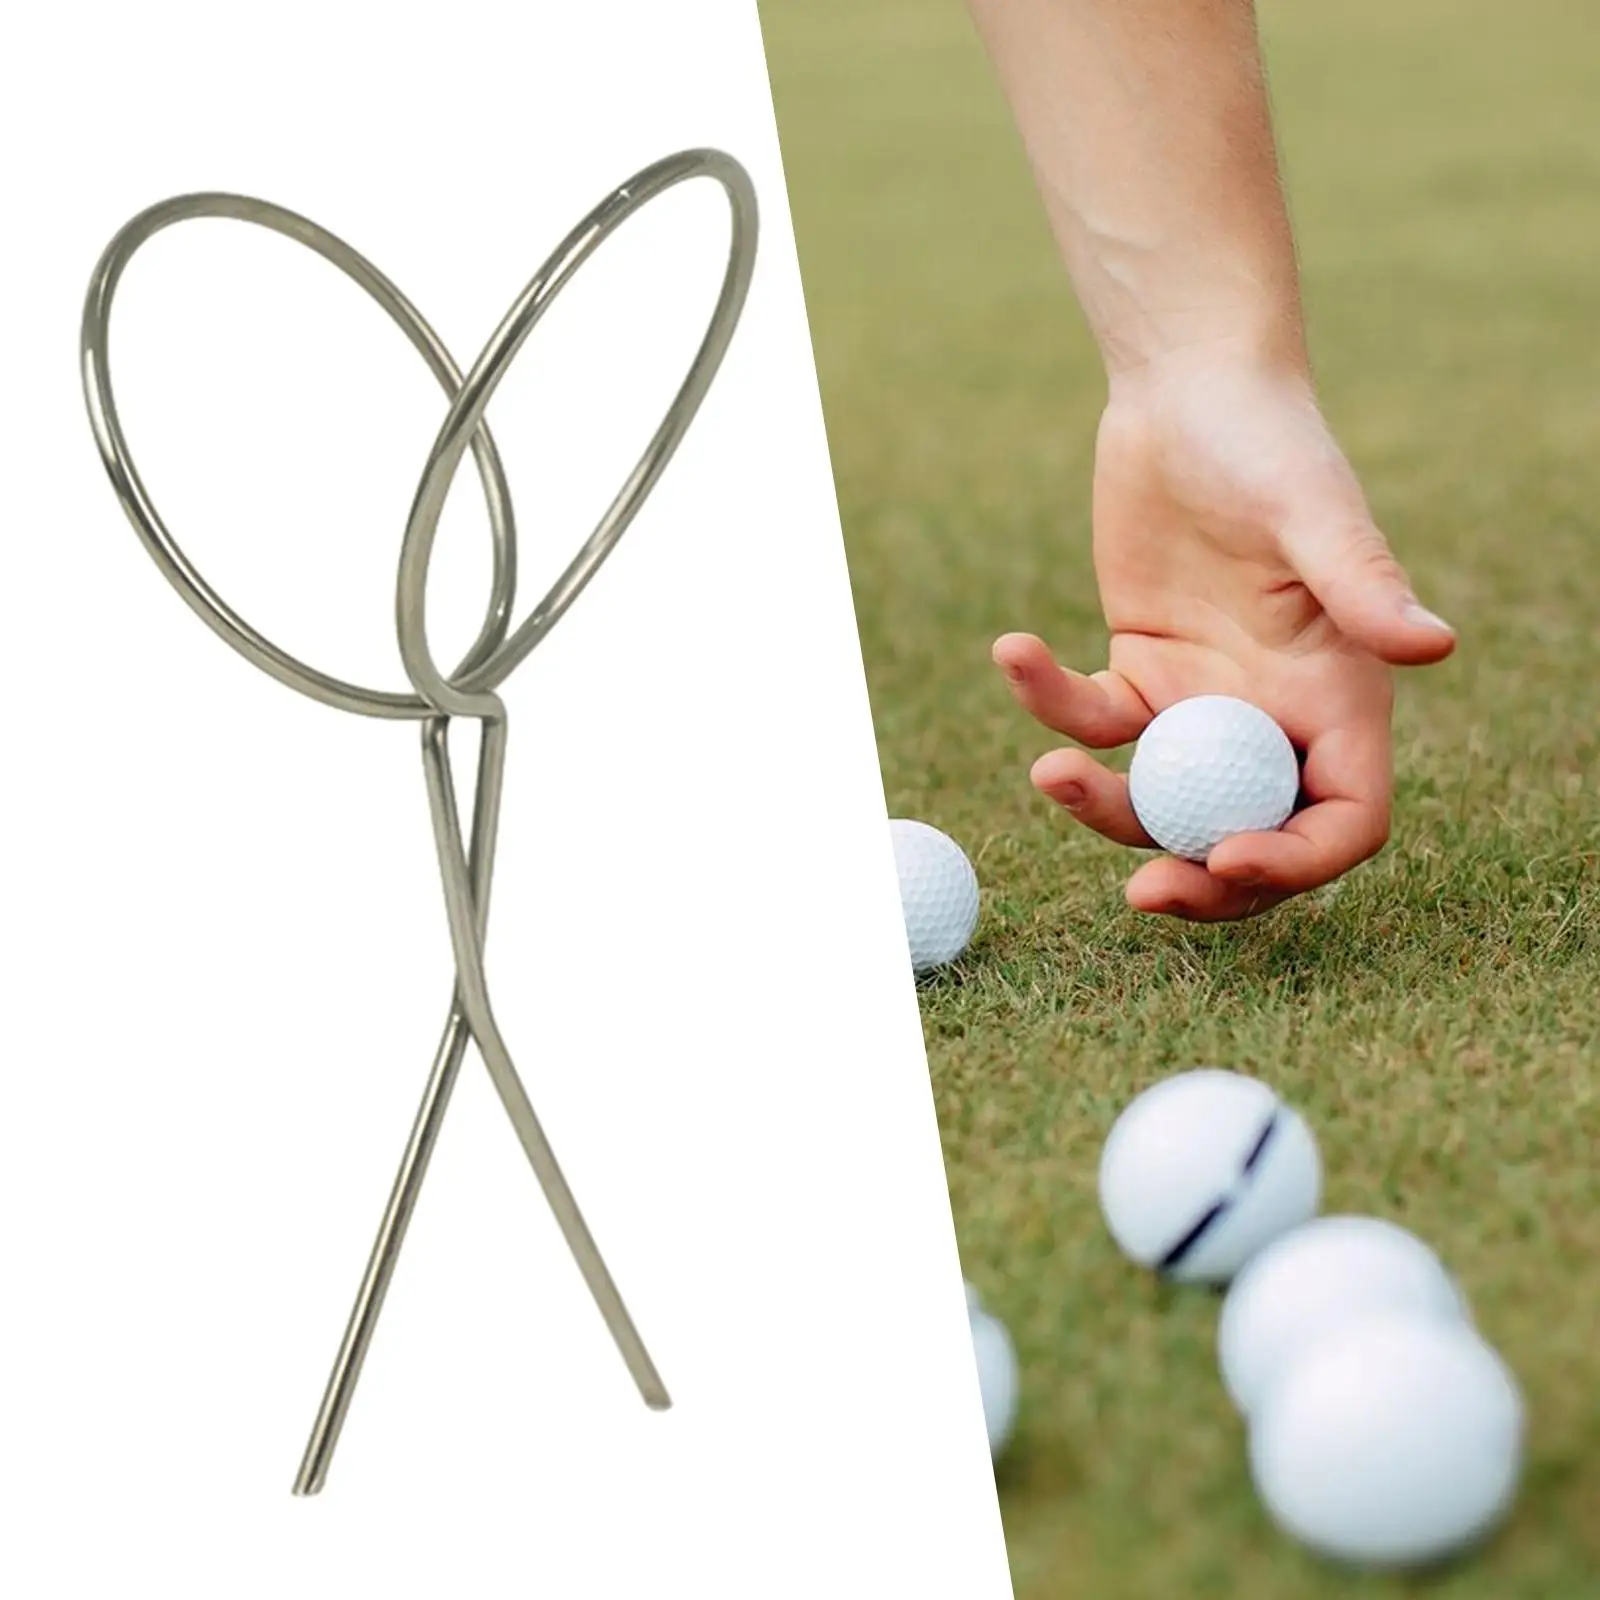 

Golf Ball Retriever, Park Golf Ball Clip Grabber, Ball Pick up Tool, Park Golf Ball Picker for Golf Practice Accessories